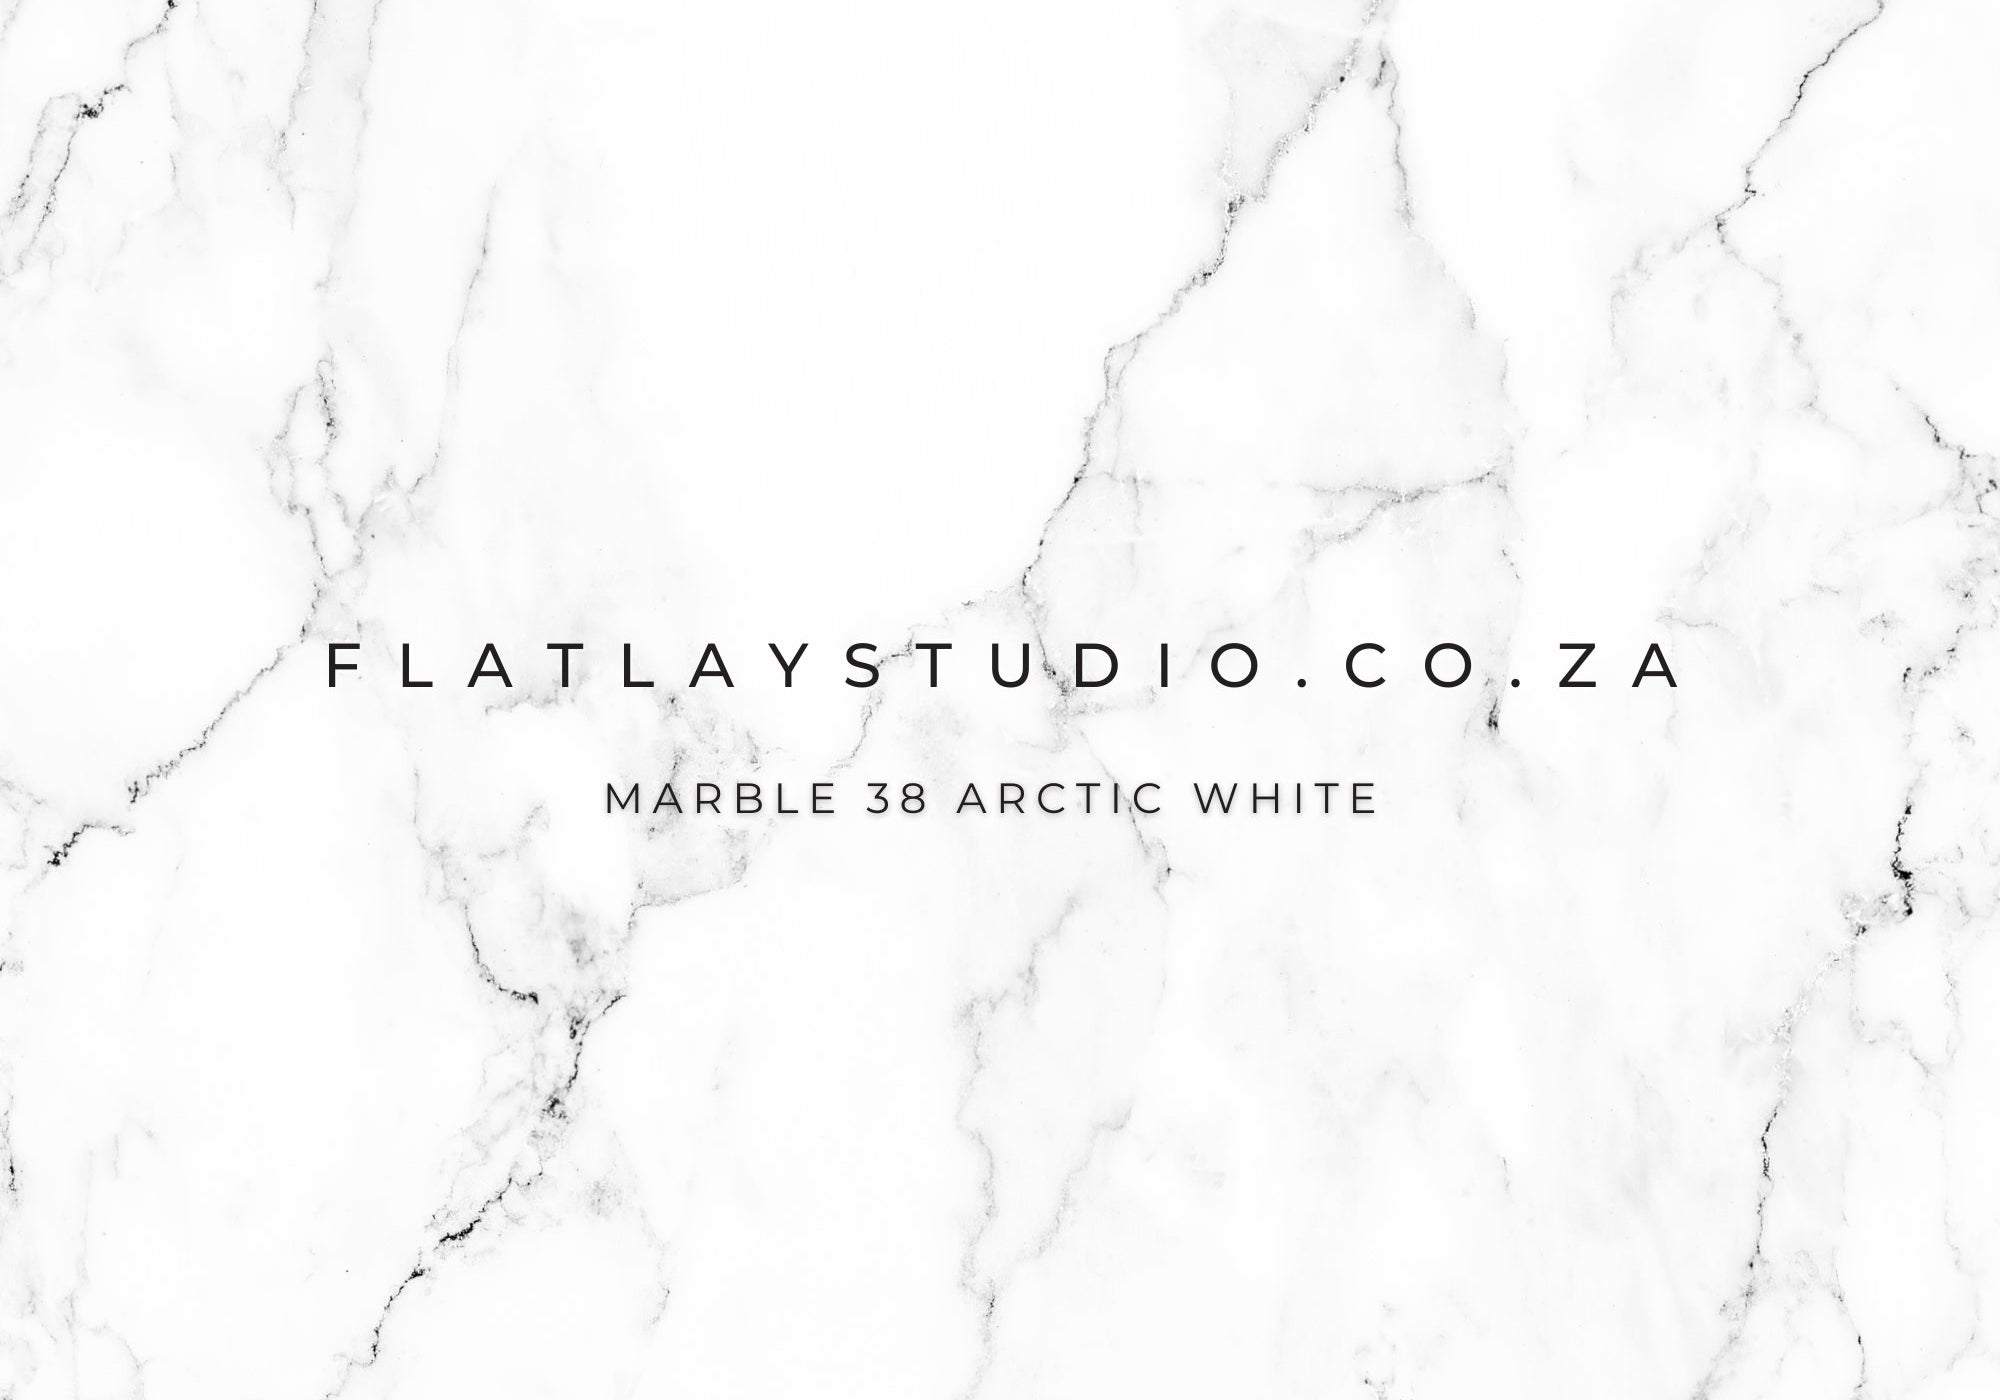 Marble 38 Arctic White - FlatlayStudio Flatlay Styling Board